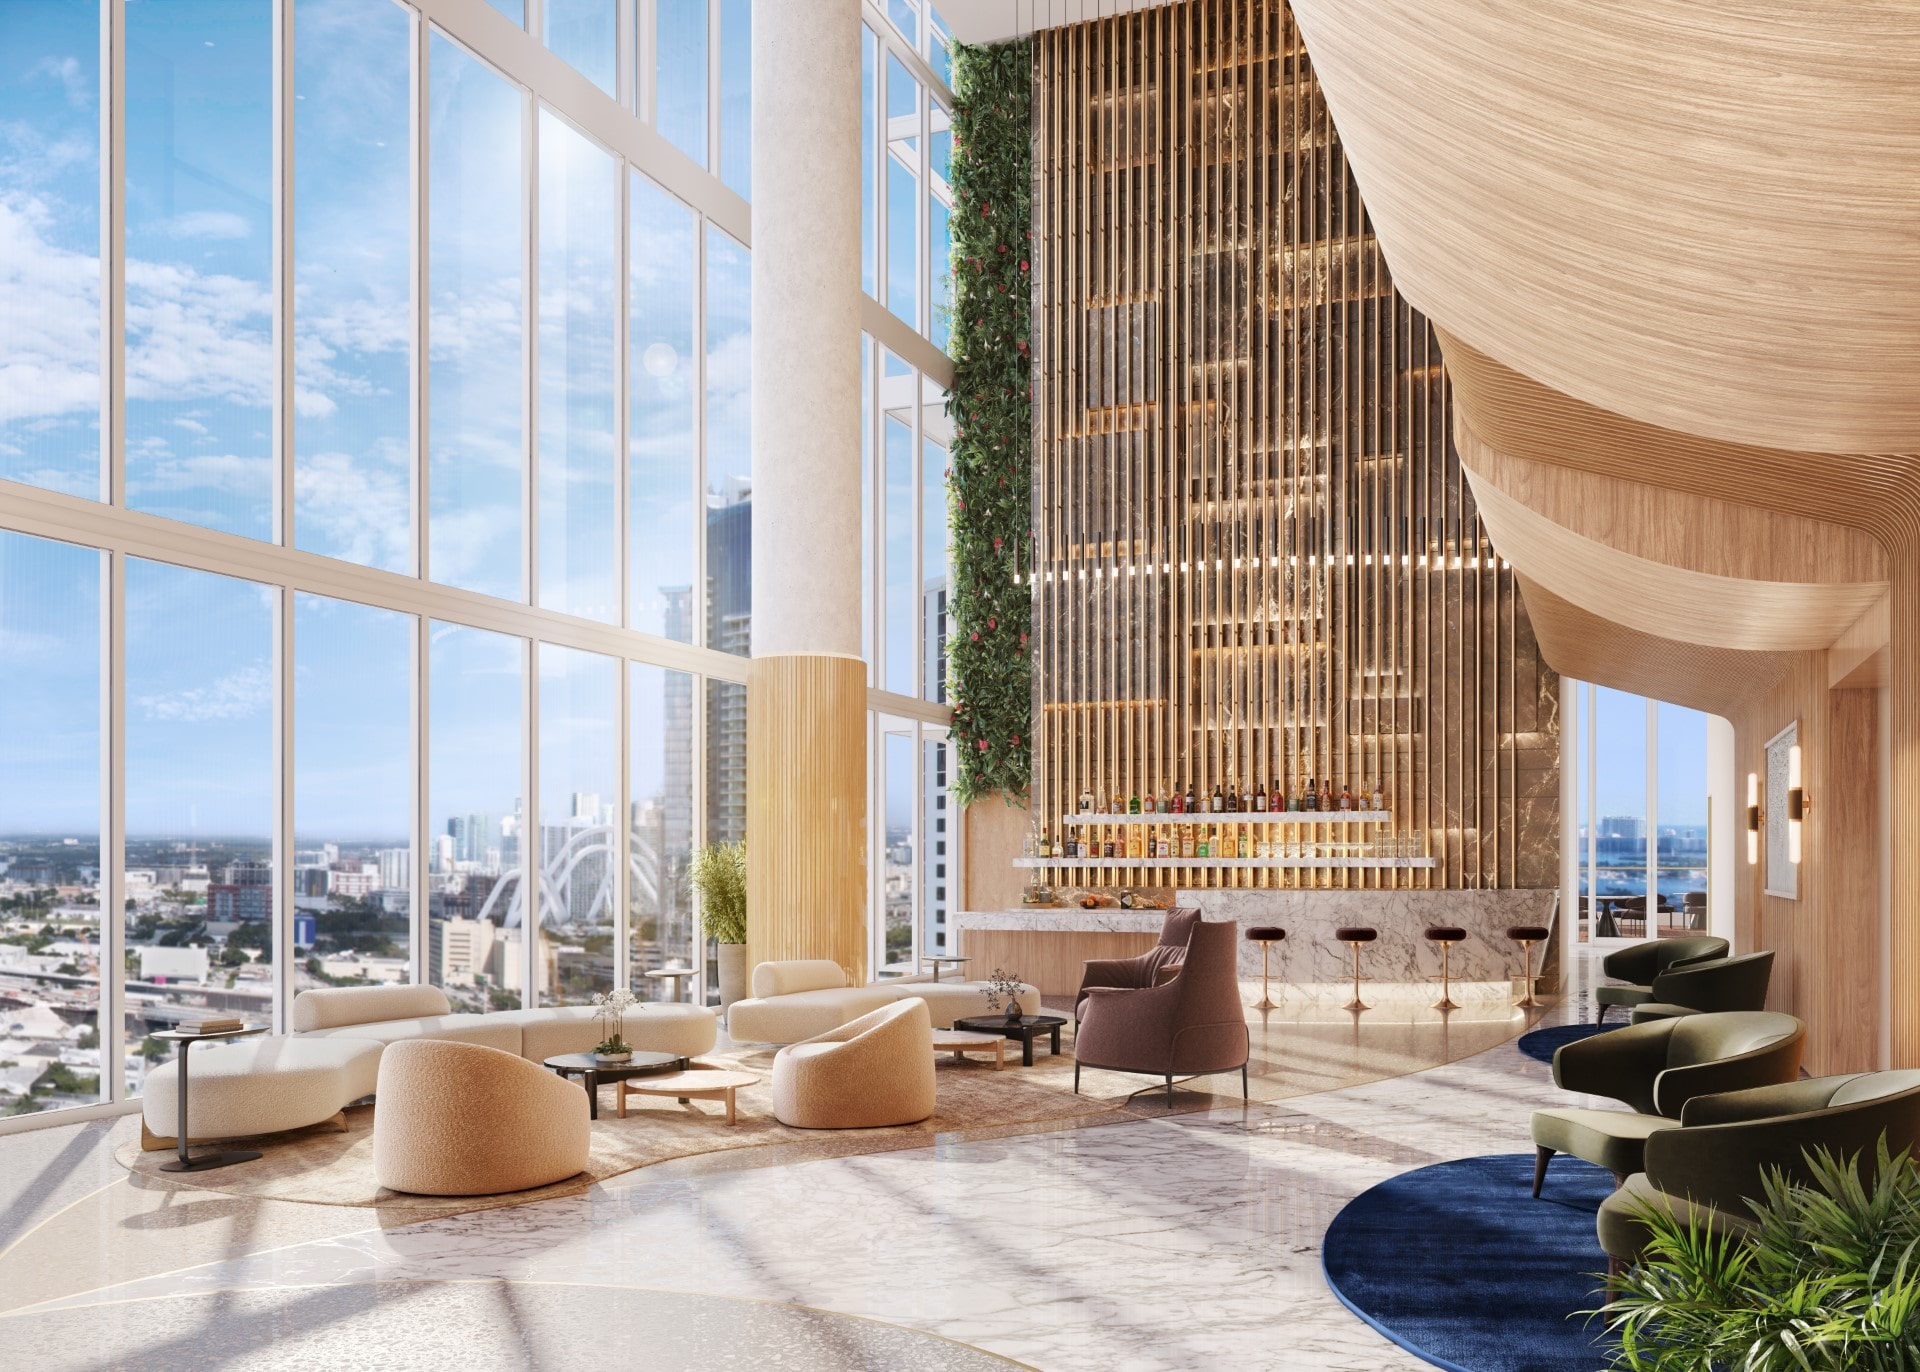 Okan Tower Hilton Hotel Concept